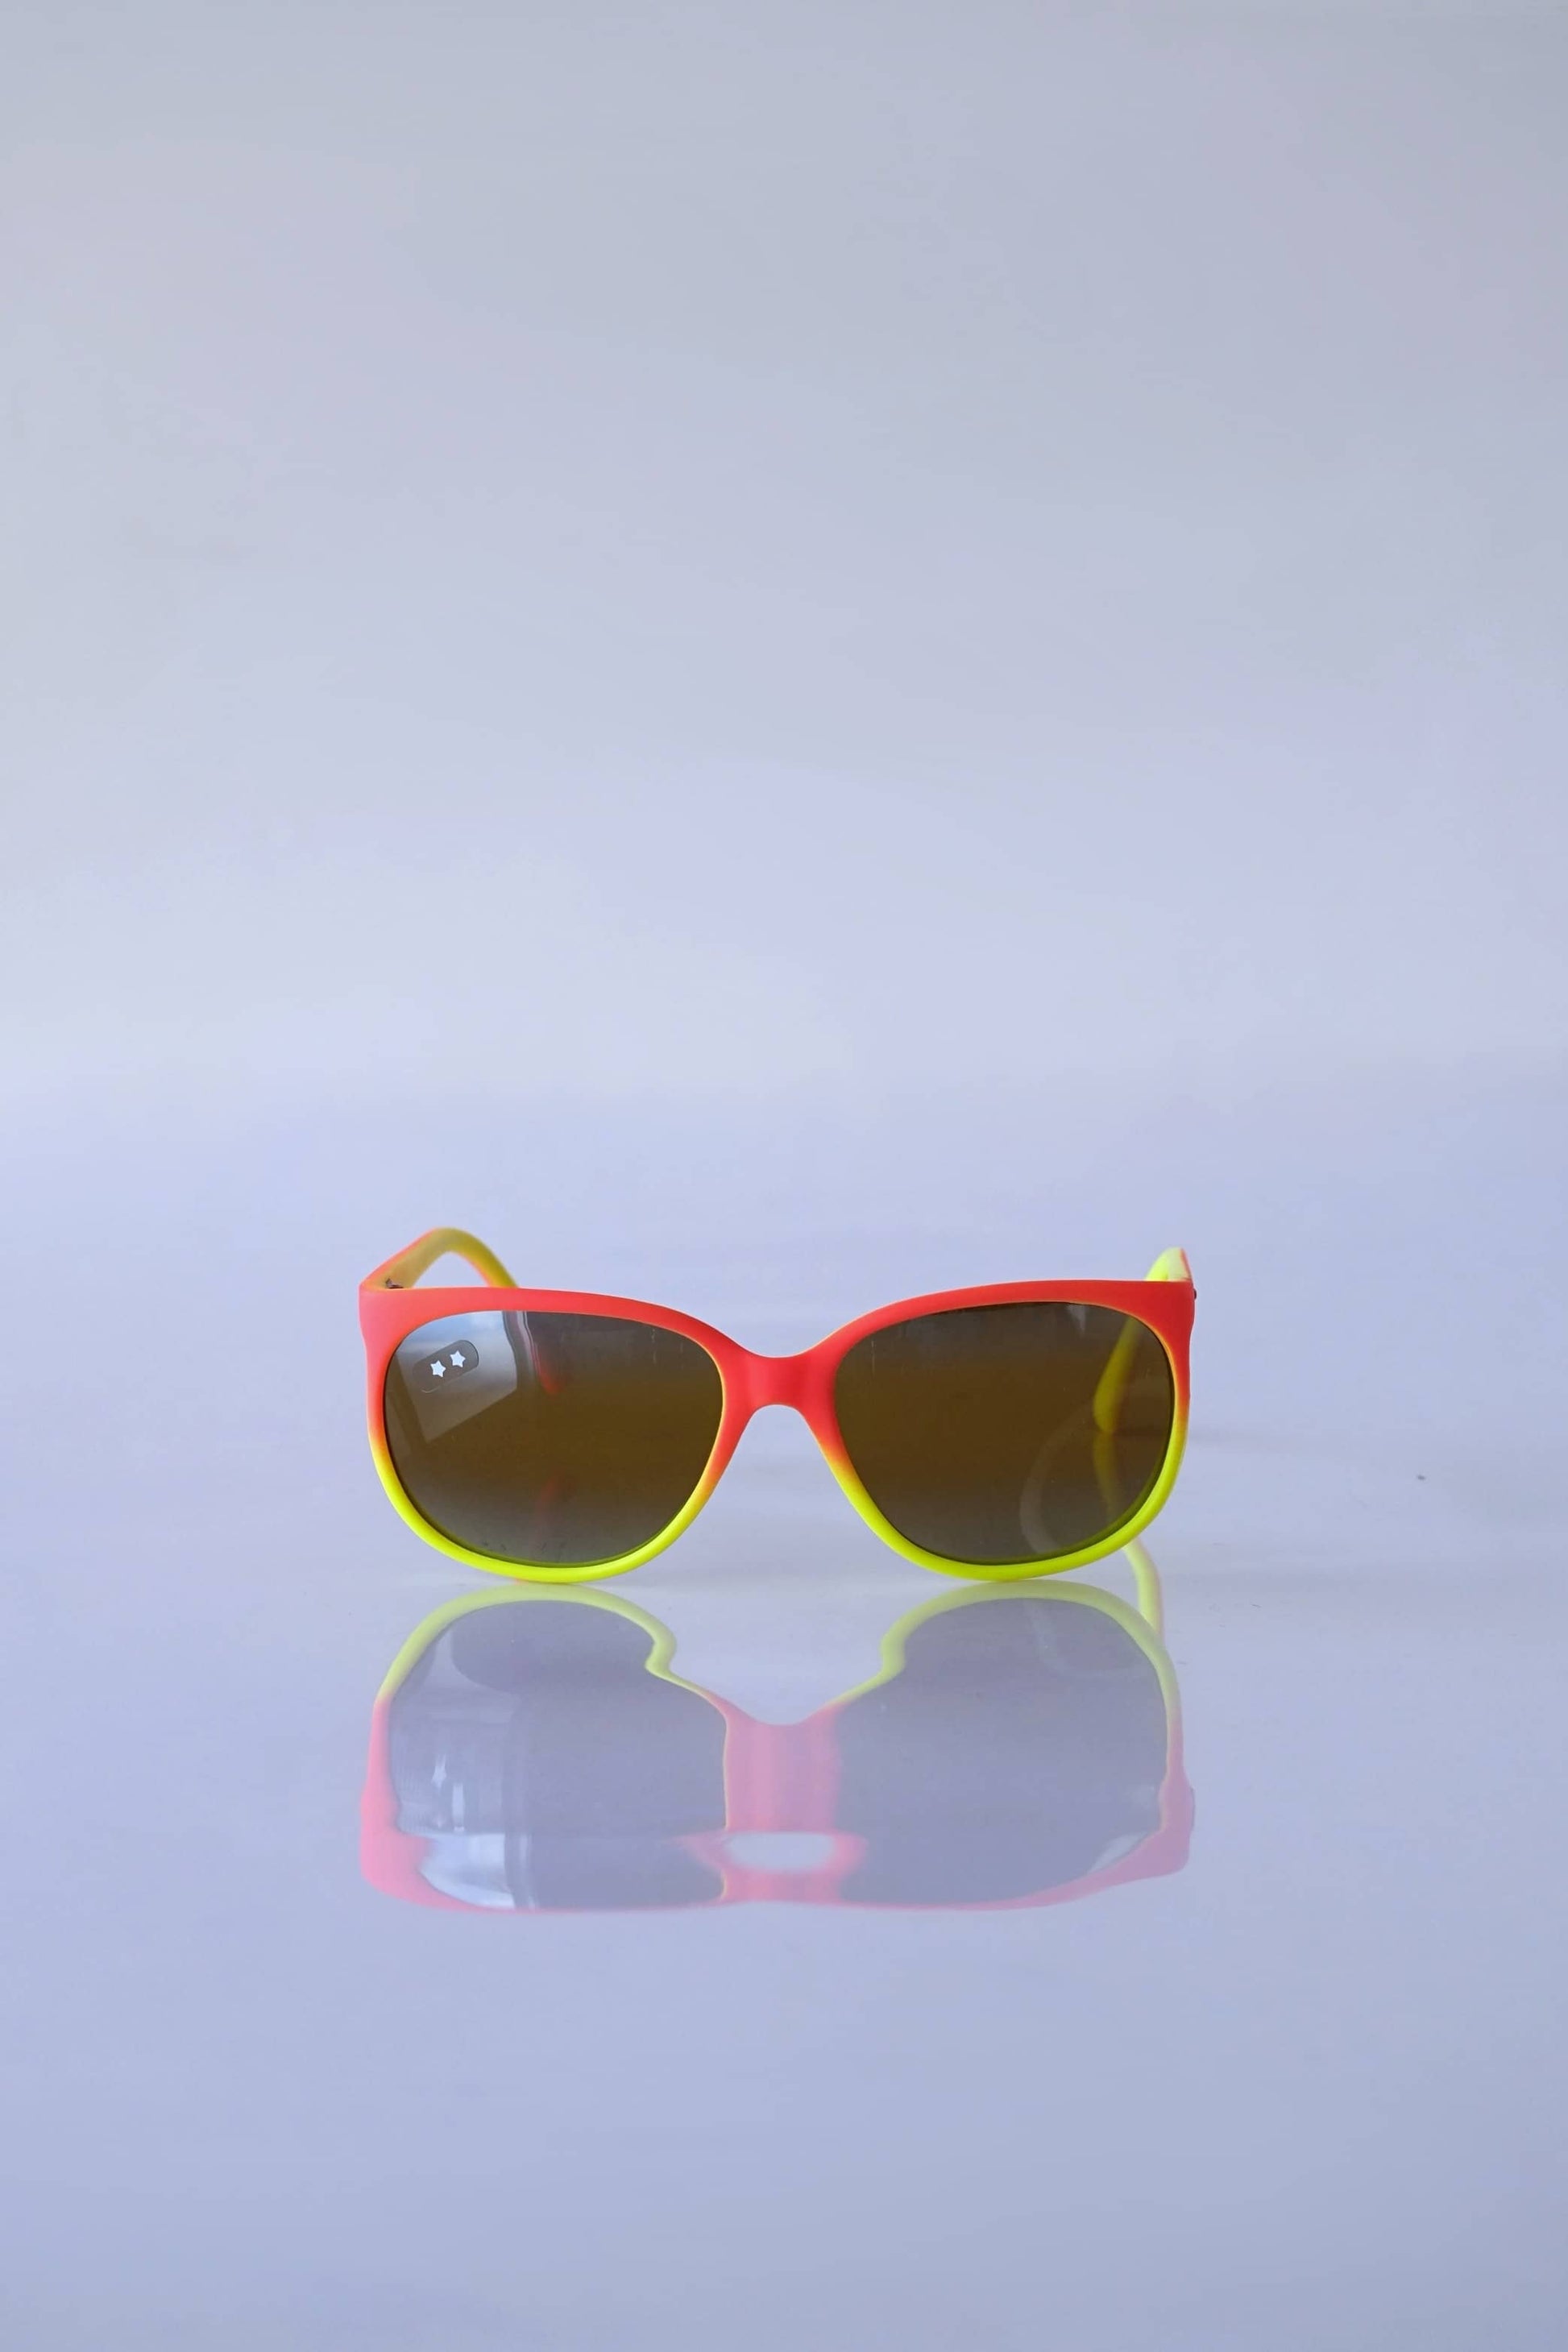 CÉBÉ Vintage Neon & Mirrored Sunglasses in orange and yellow